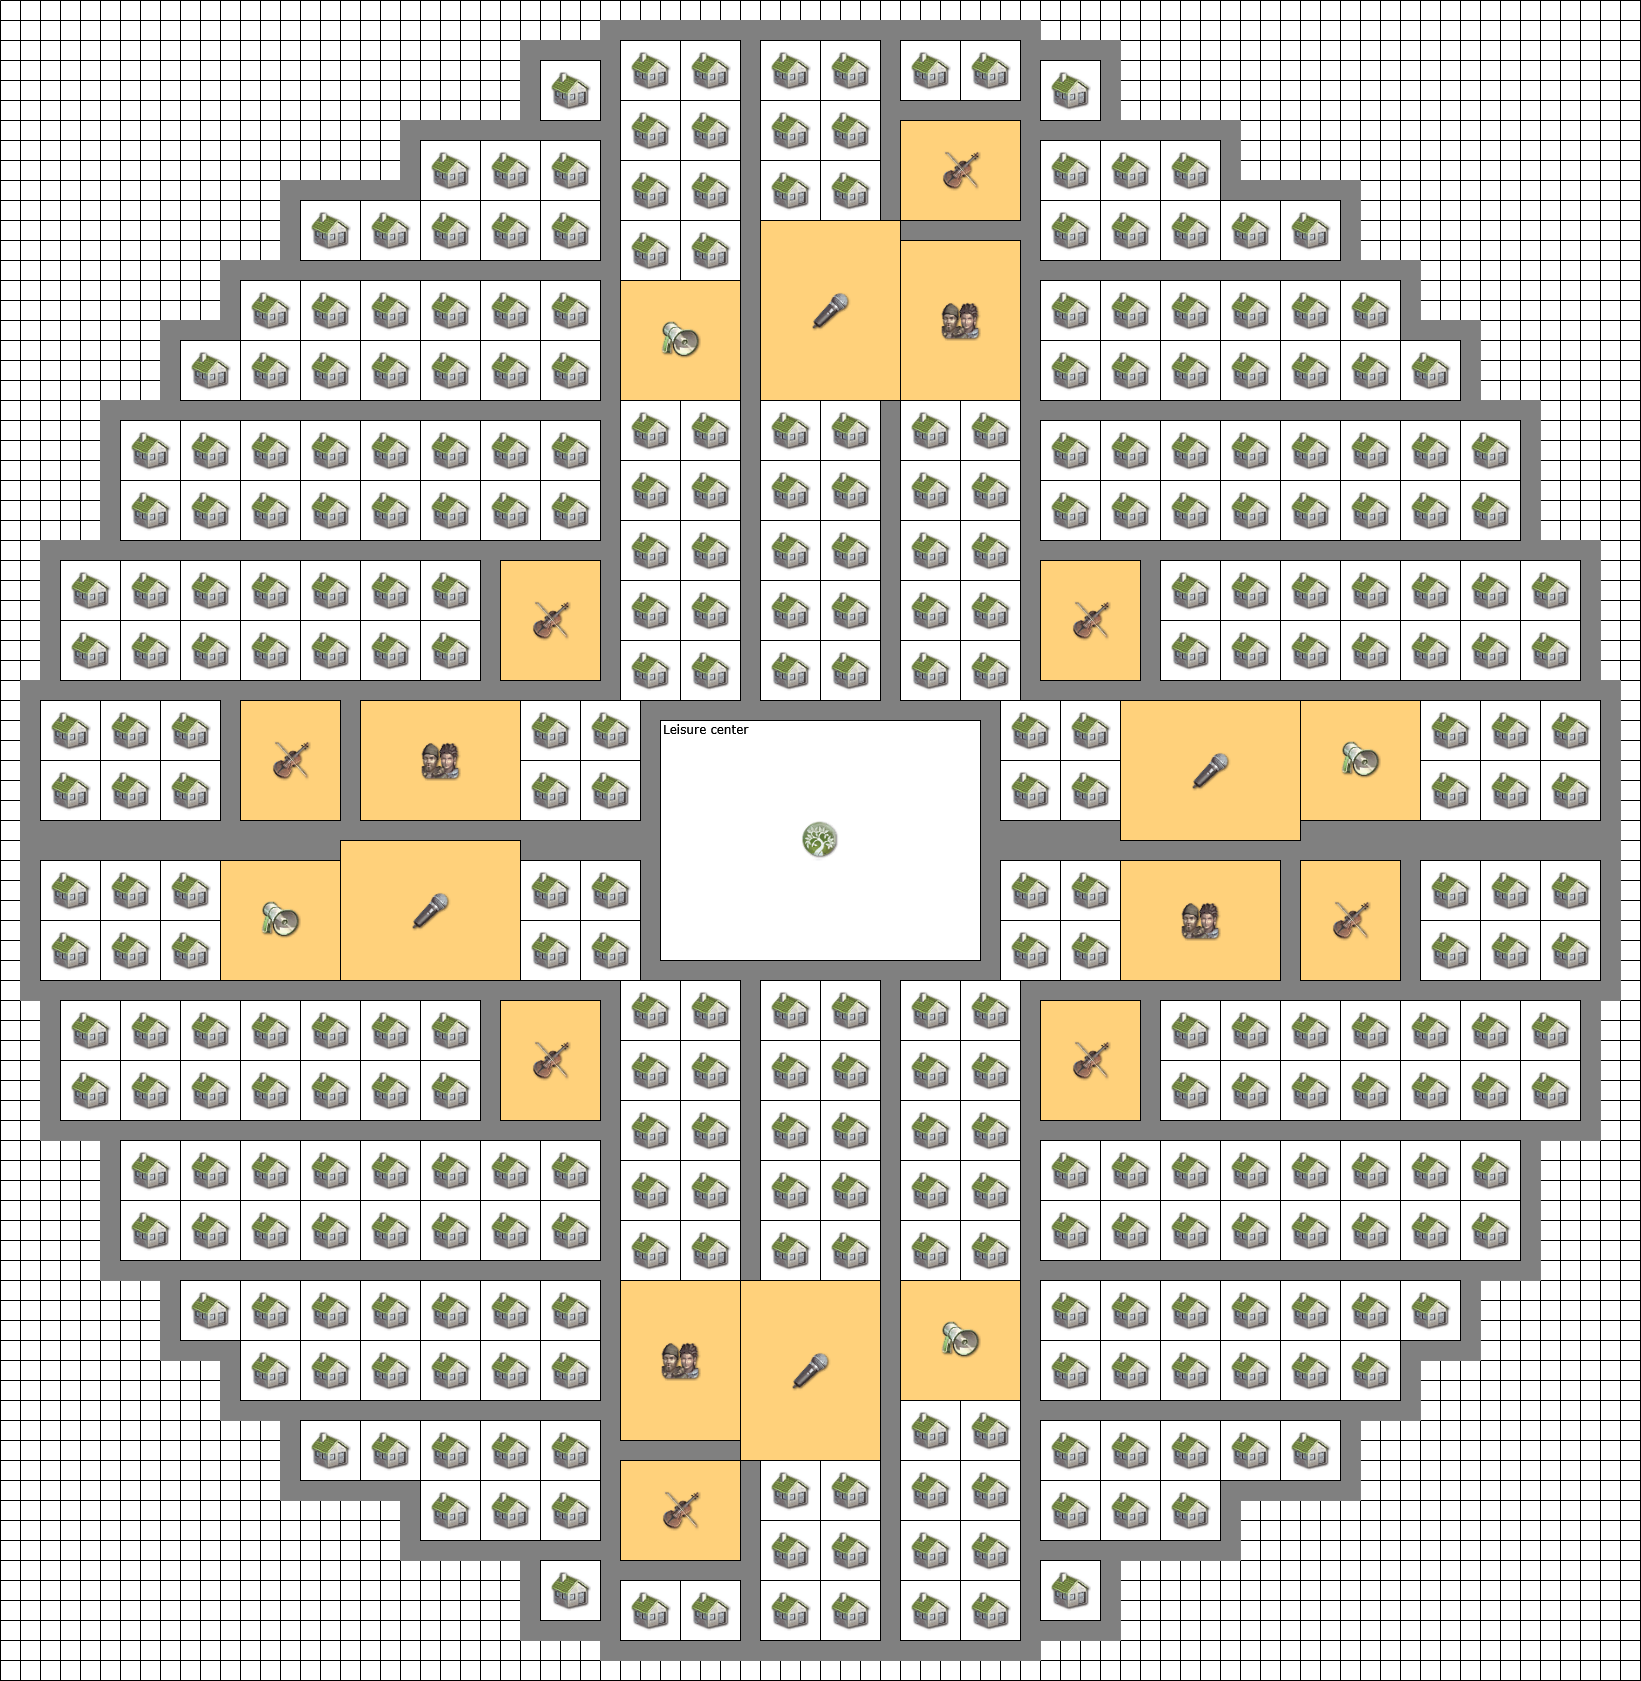 anno 2070 building layouts